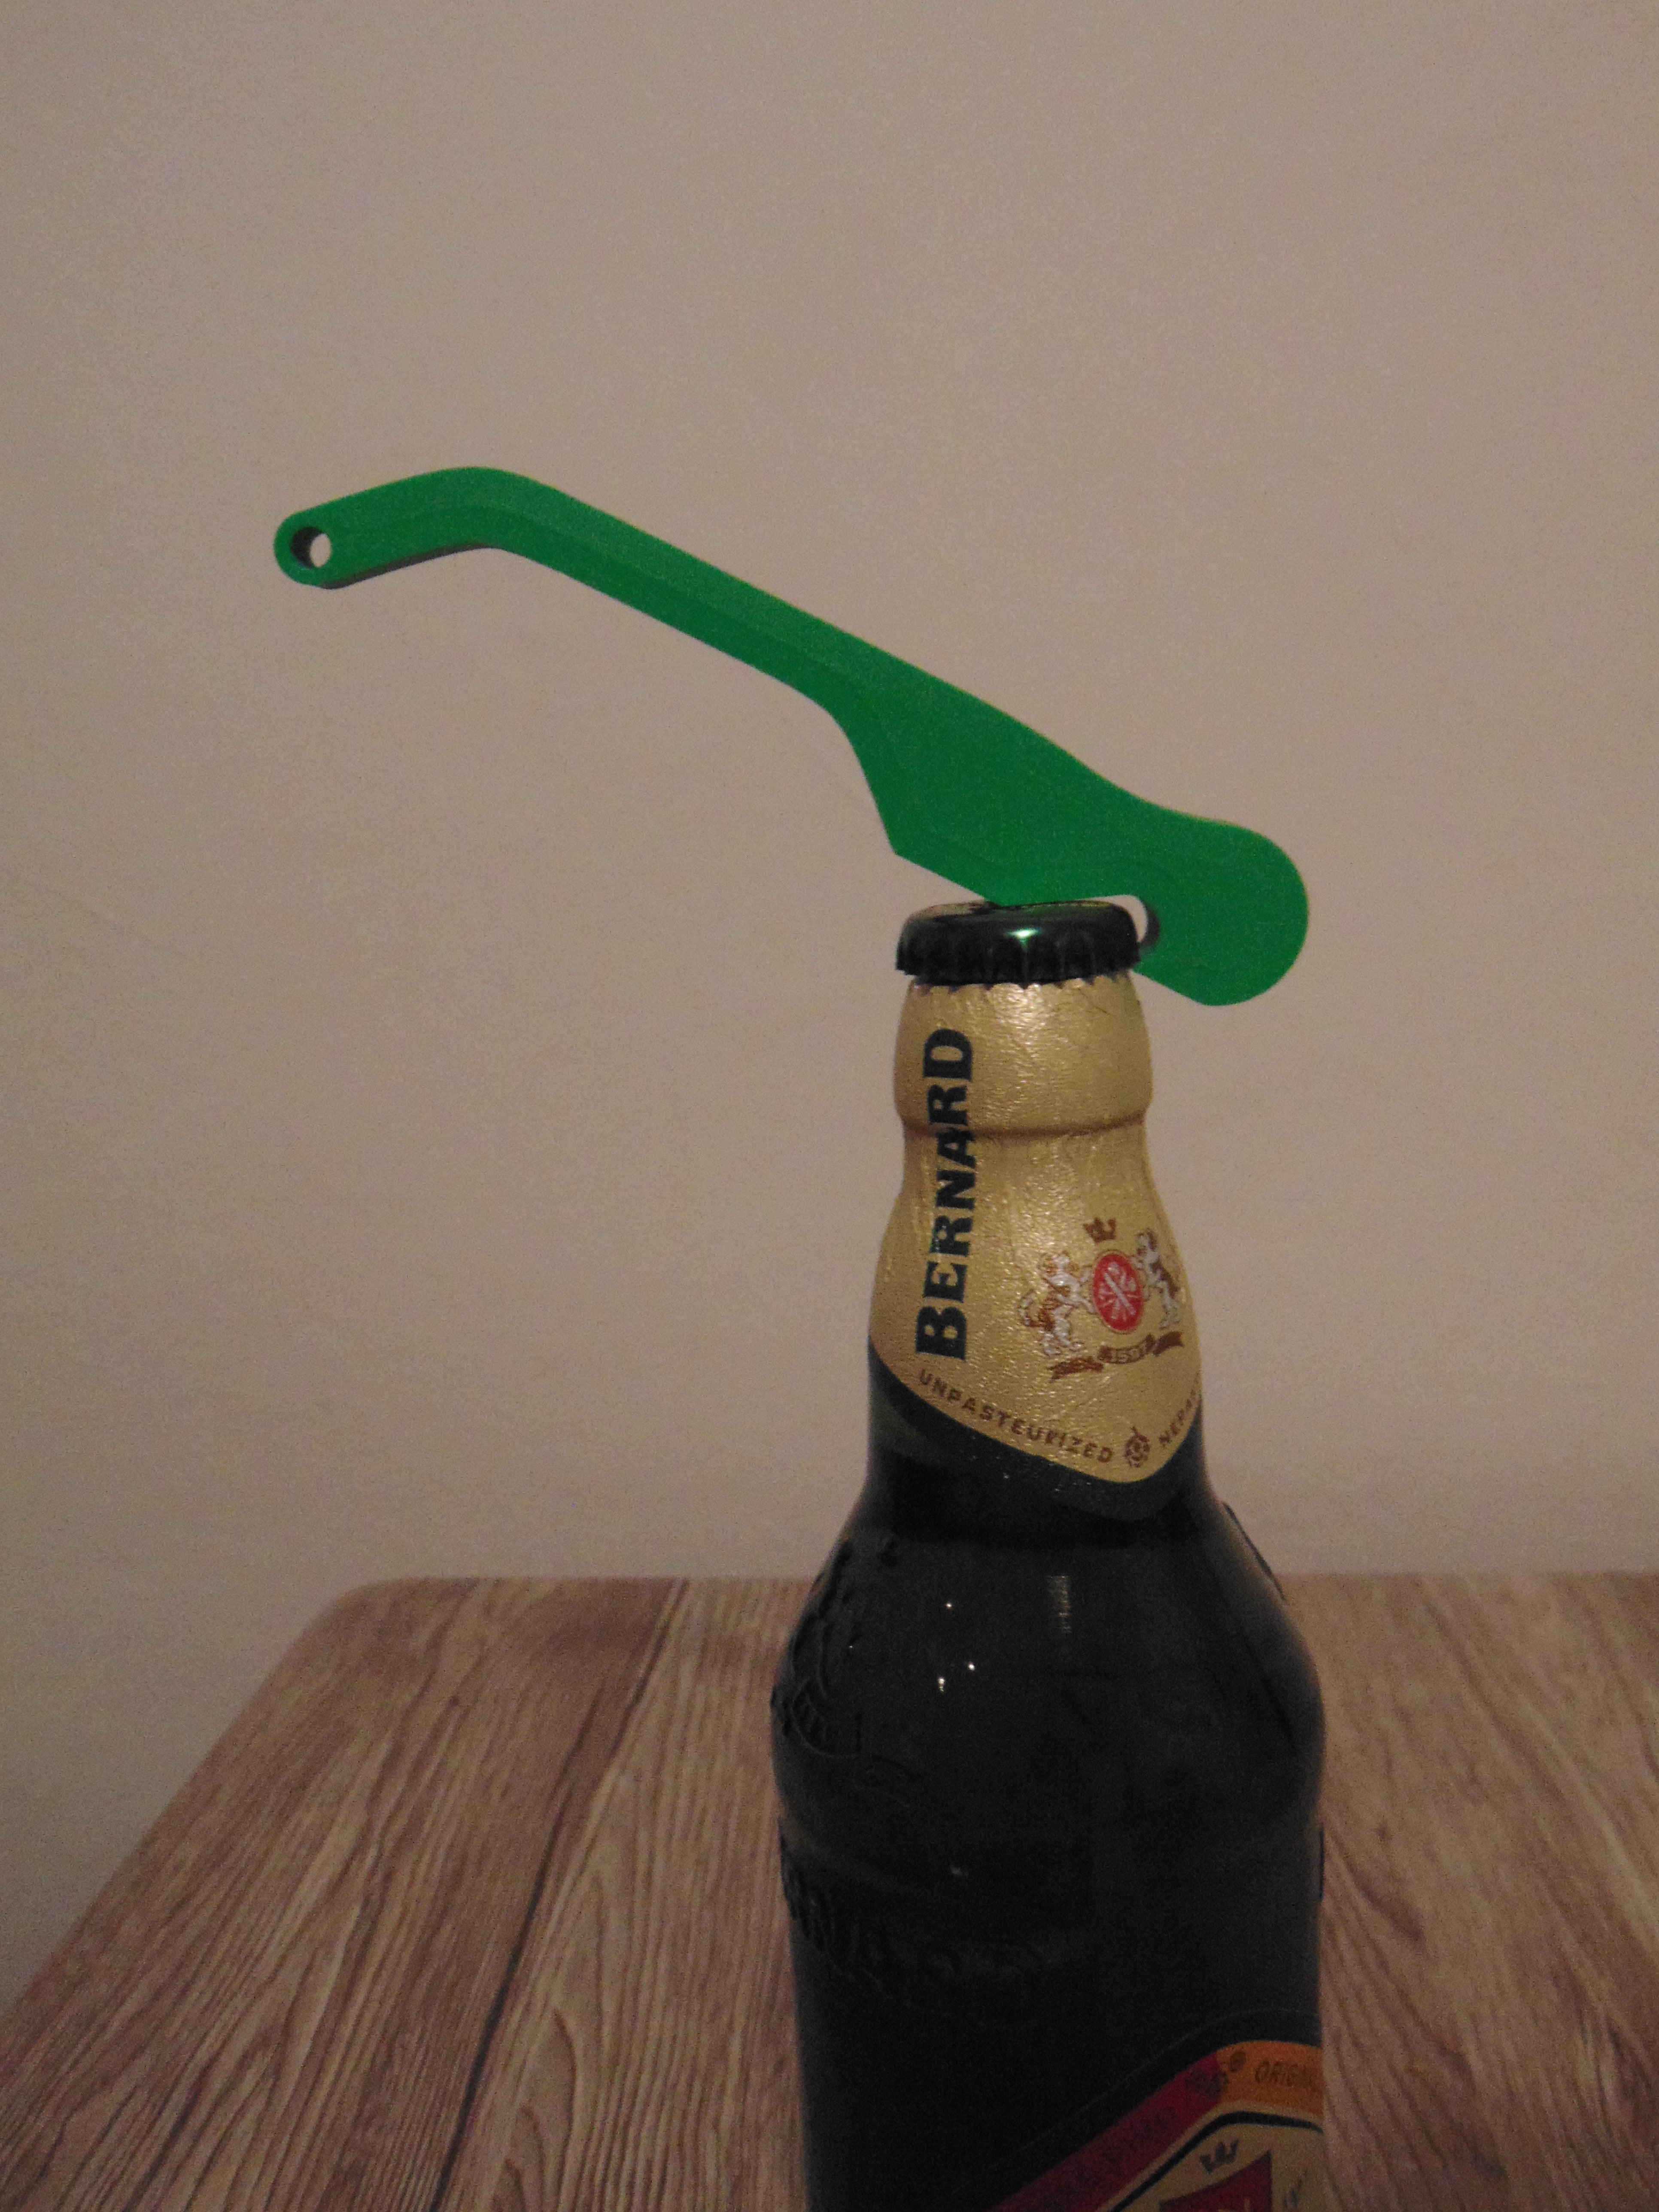 Simple beer bottle opener in PLA